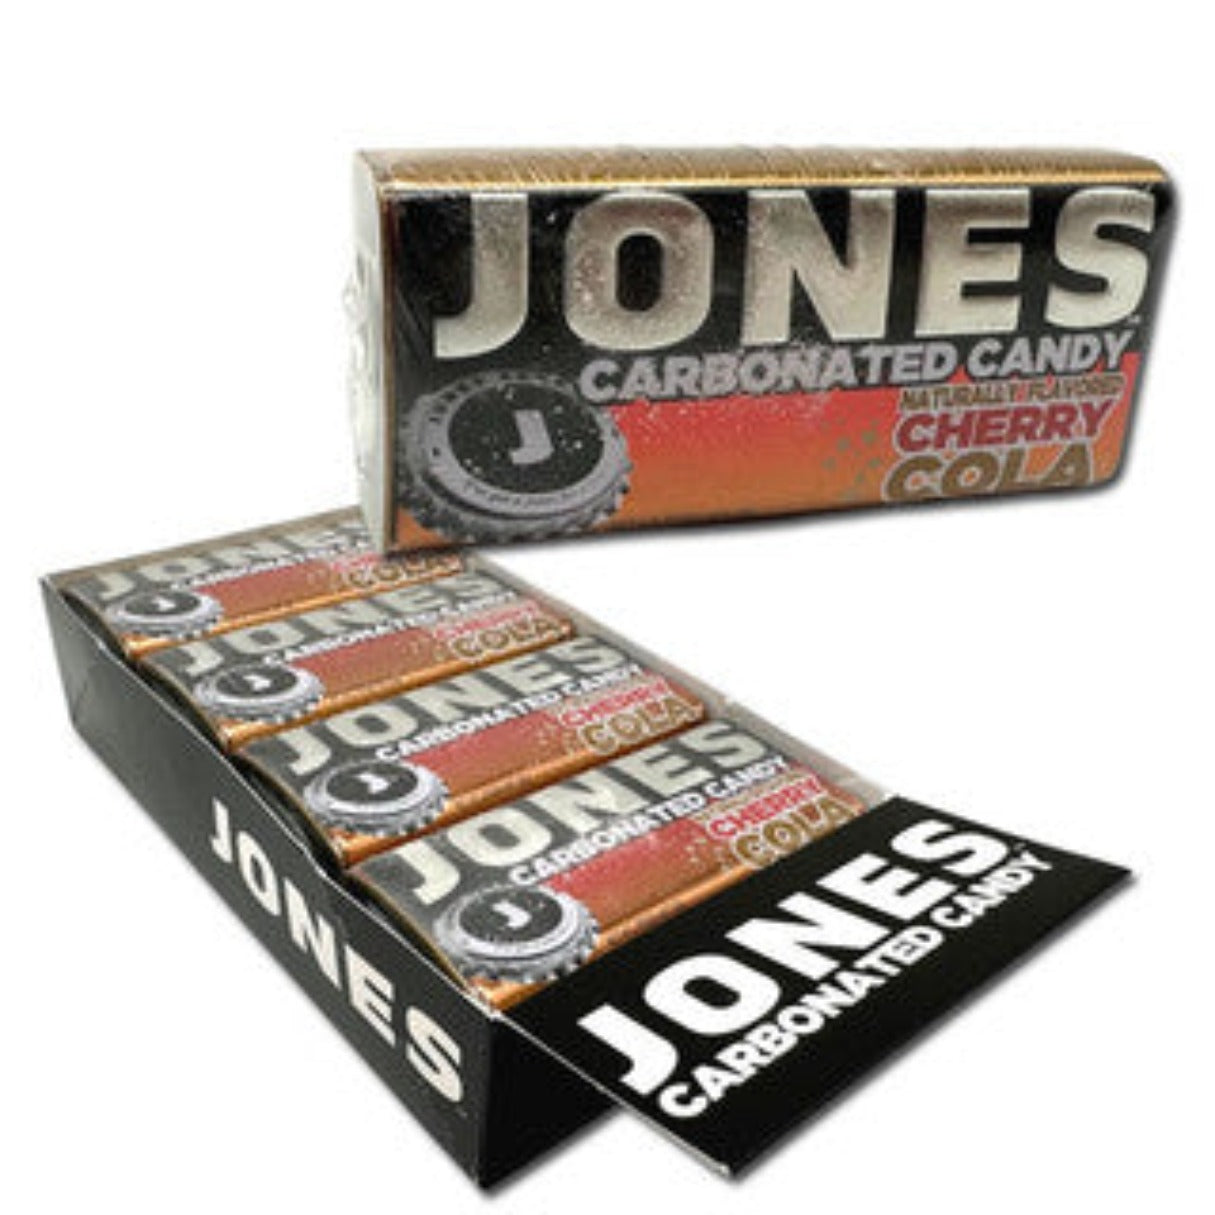 Jones Carbonated Candy Cherry Cola